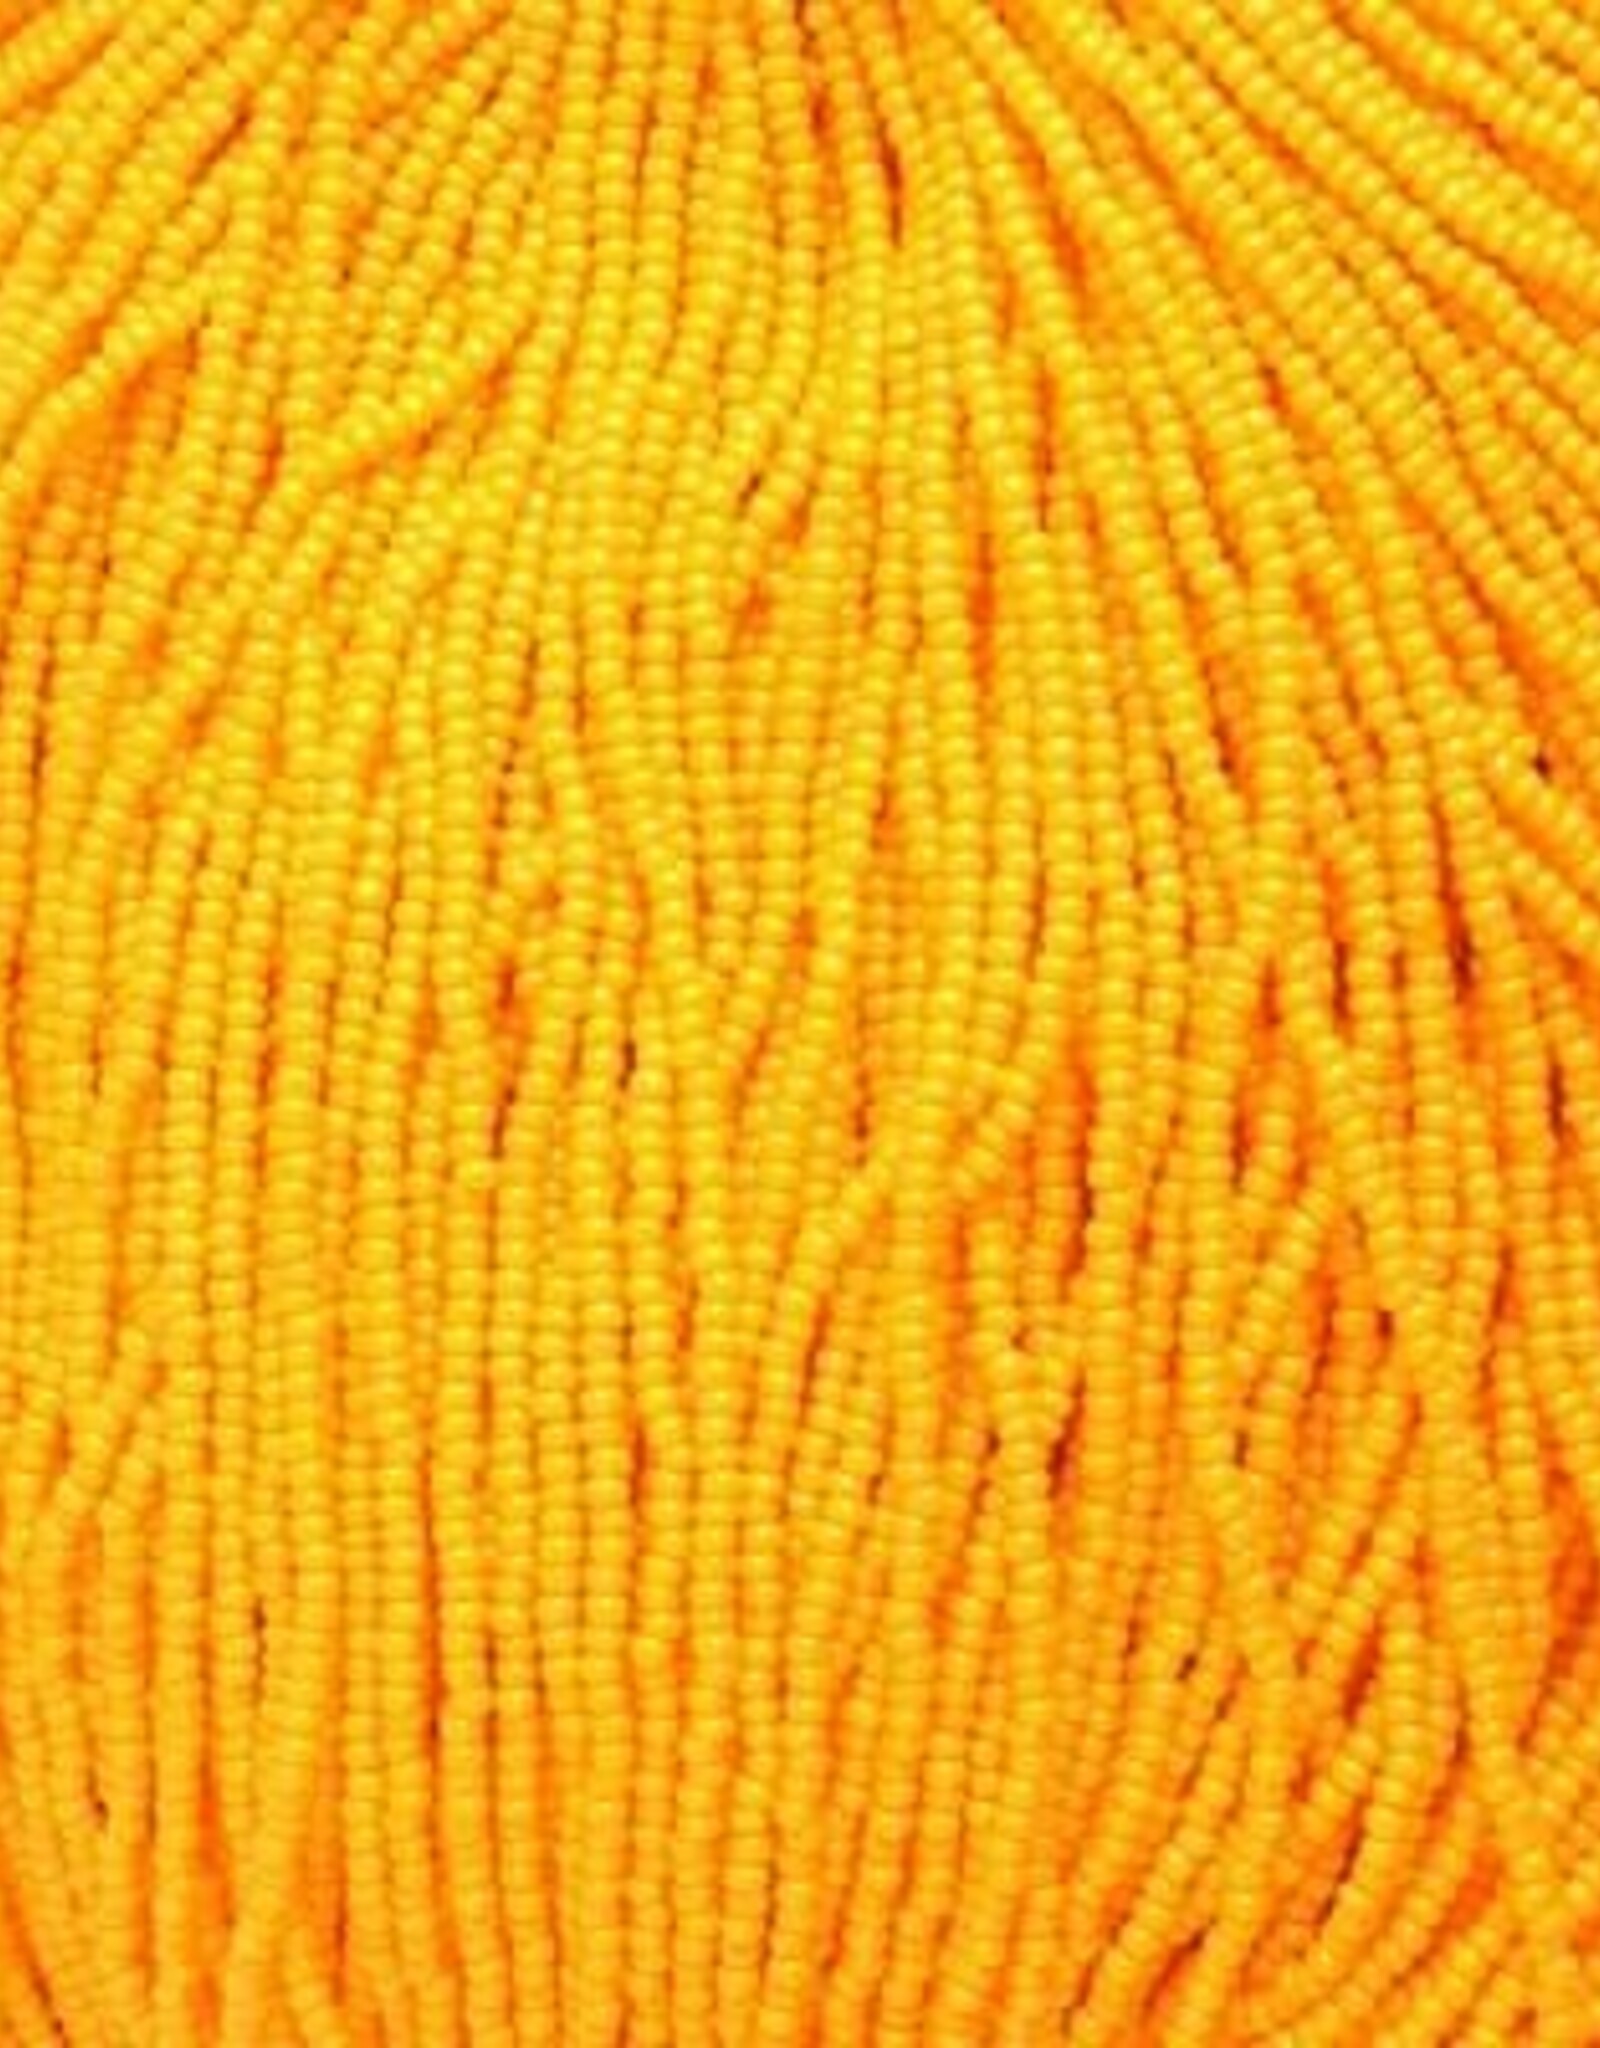 Seed Beads11/0 Op. Light Orange Strung 34918